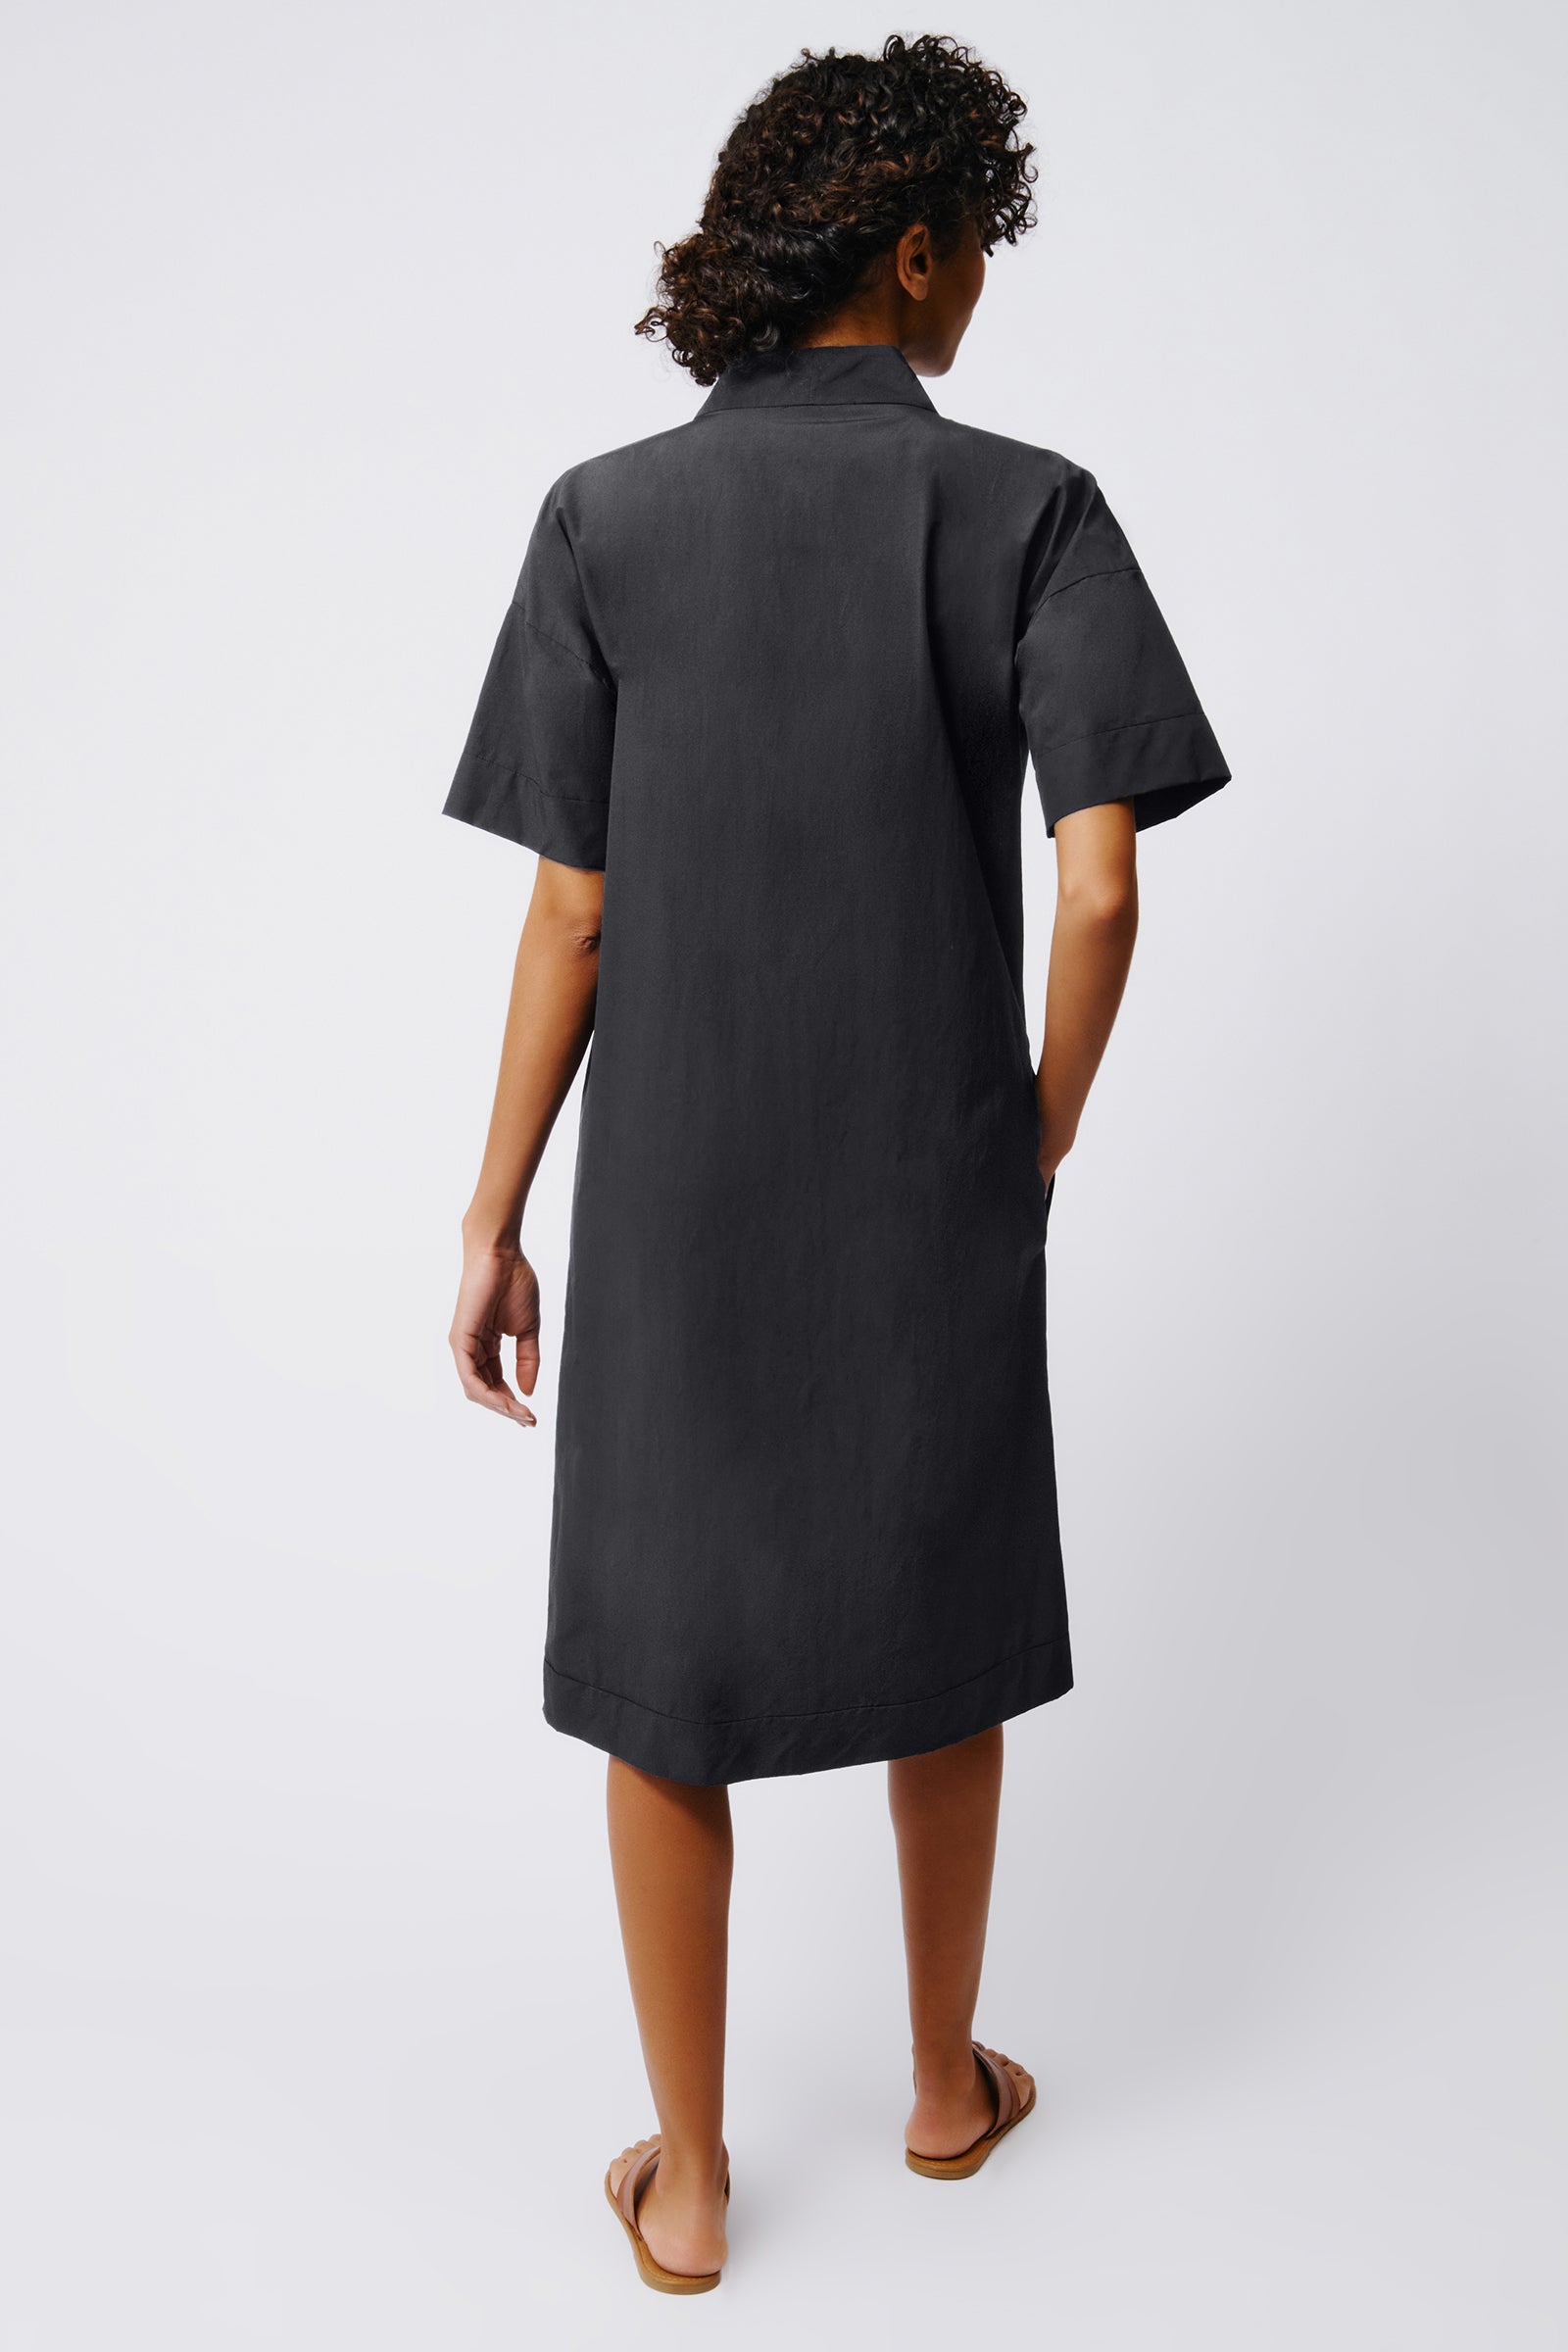 Kal Rieman Notch Placket Dress in Black on Model Front View Crop 5